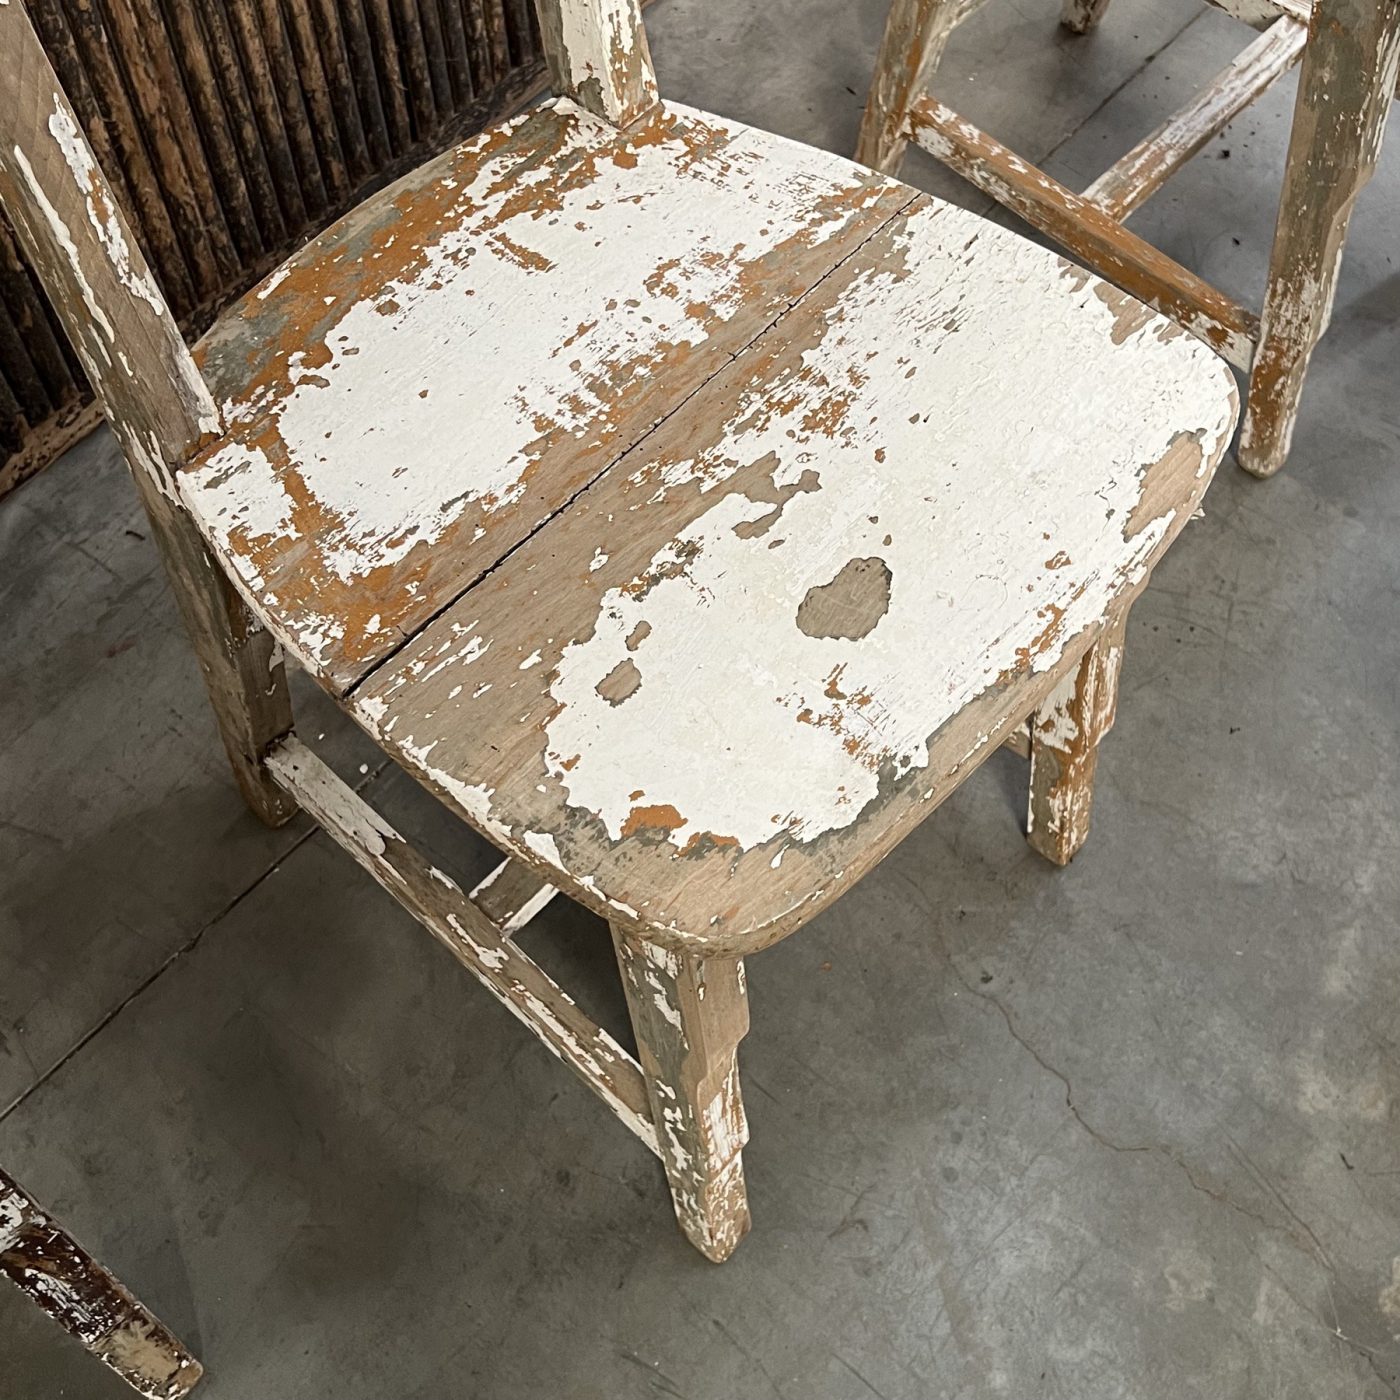 objet-vagabond-painted-chairs0001